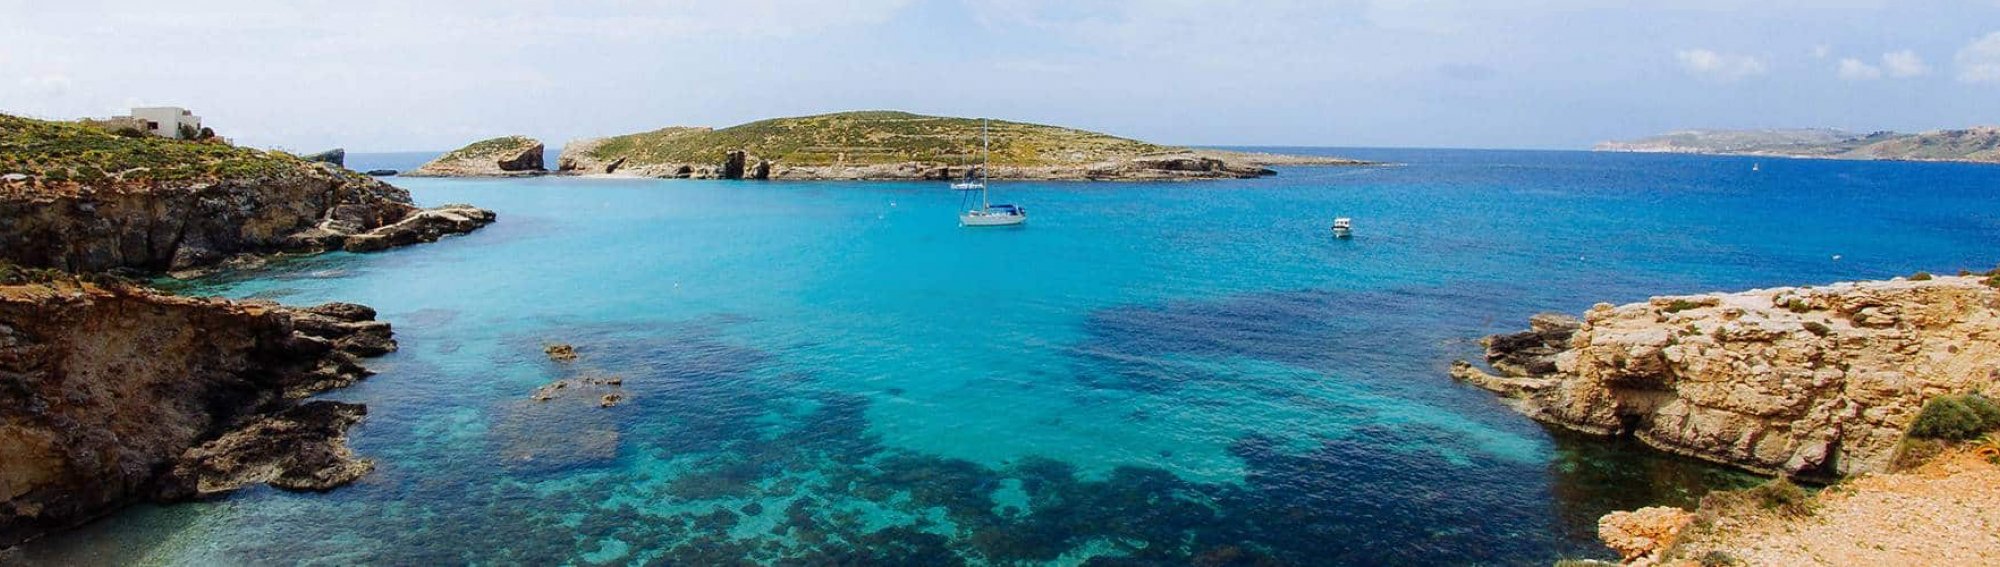 Powerboat Rides Malta malta